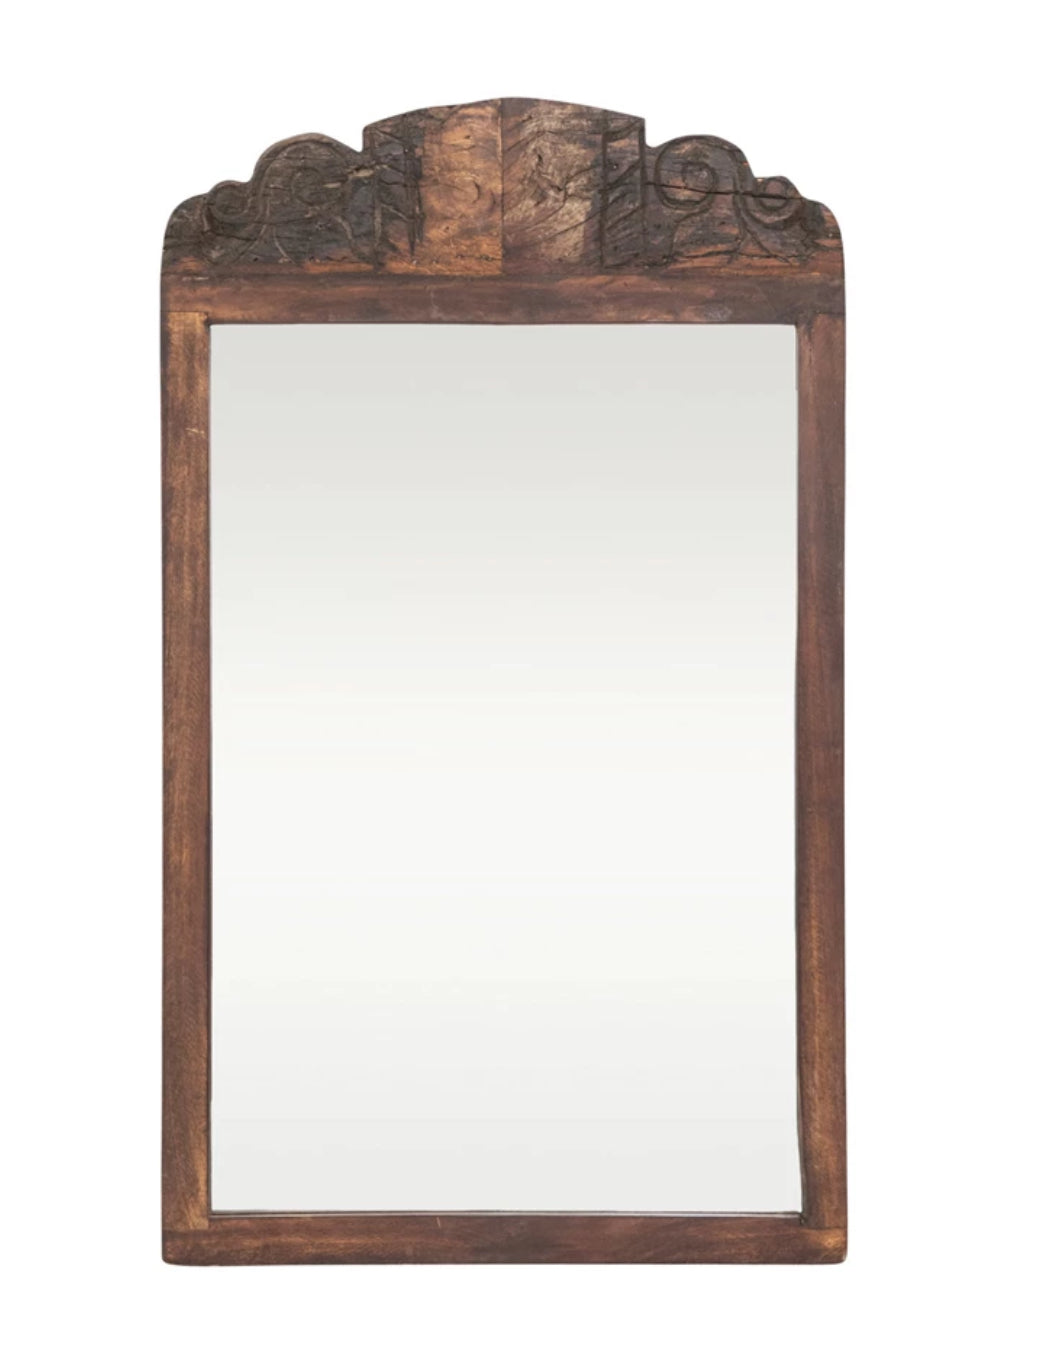 Reclaimed Wood Wall Mirror